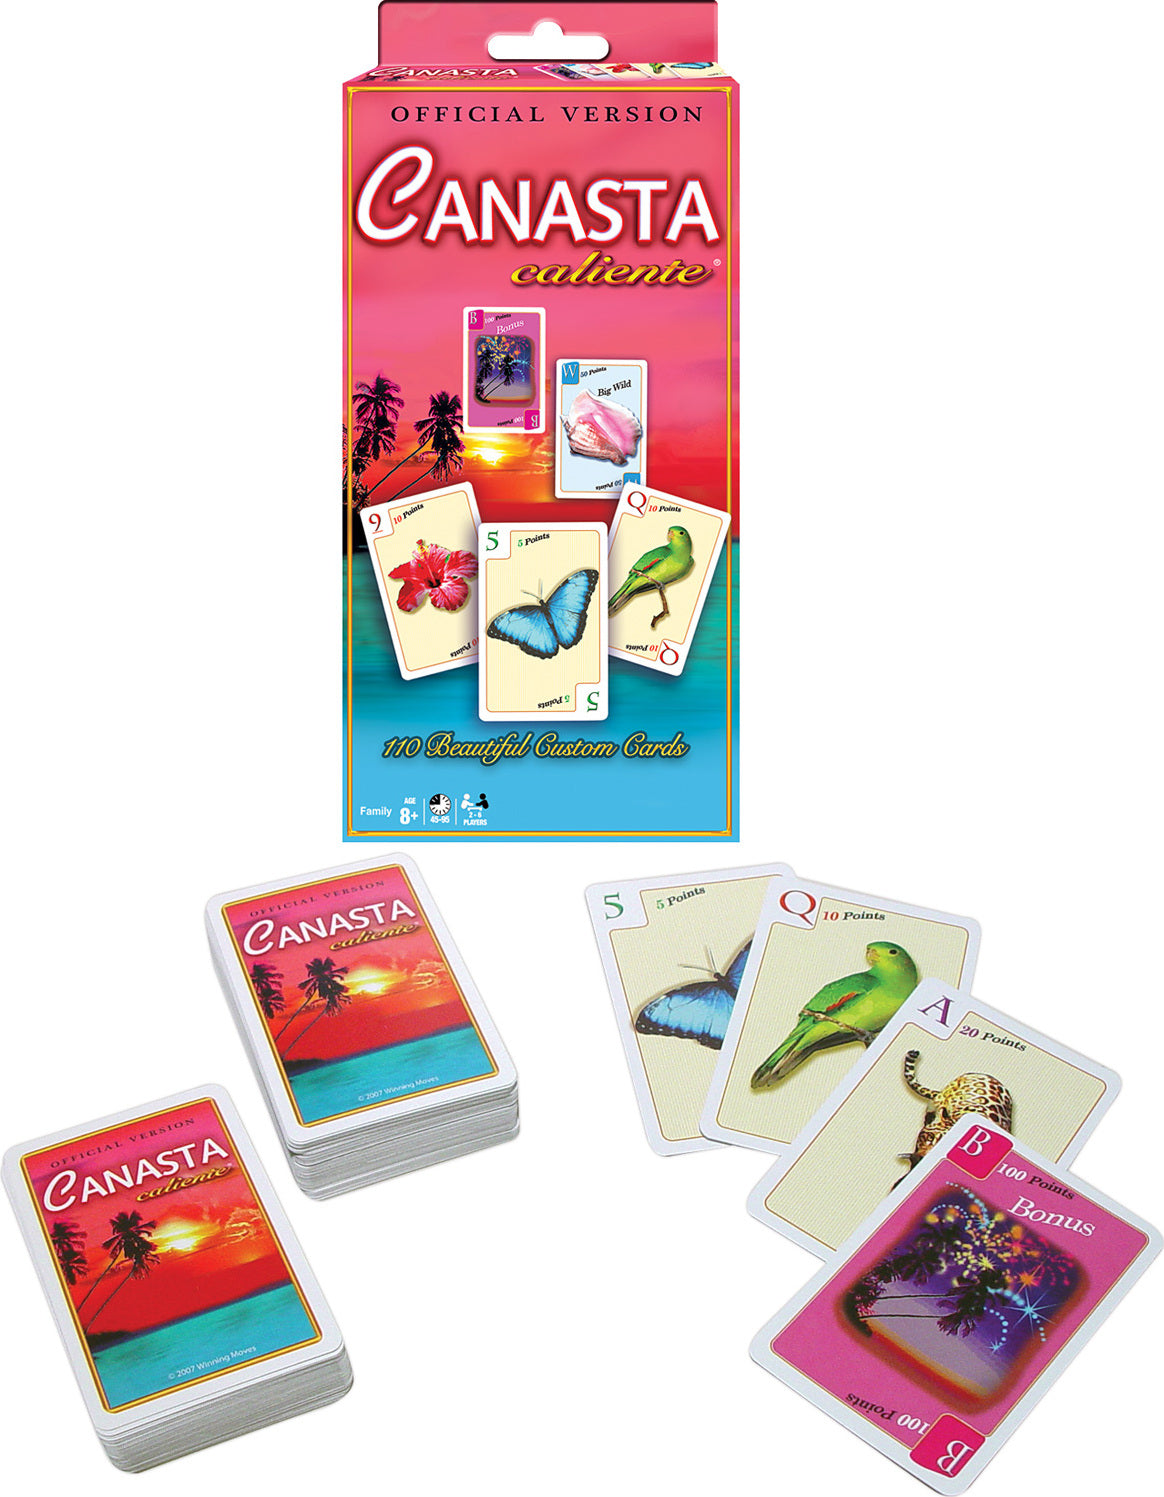 Canasta Caliente (Official Version)